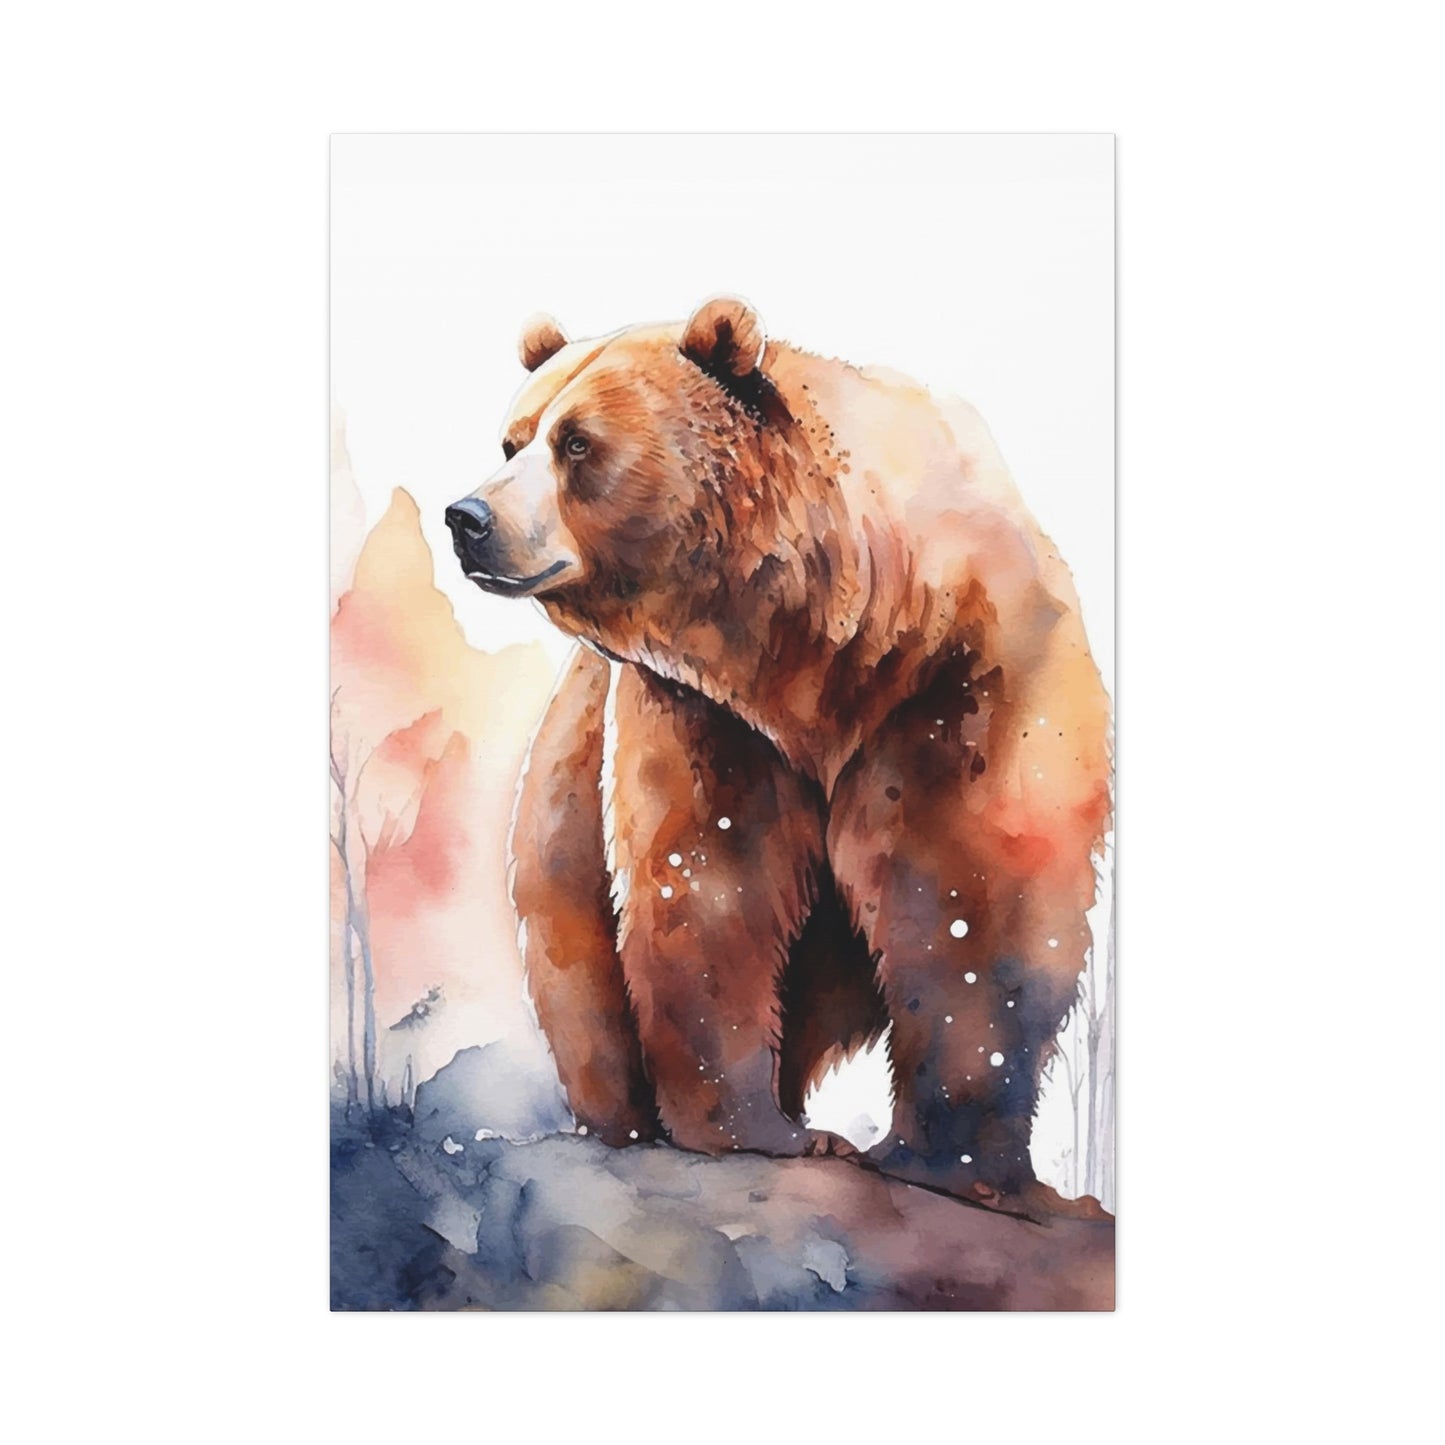 Cute Bear Wall Art & Canvas Prints